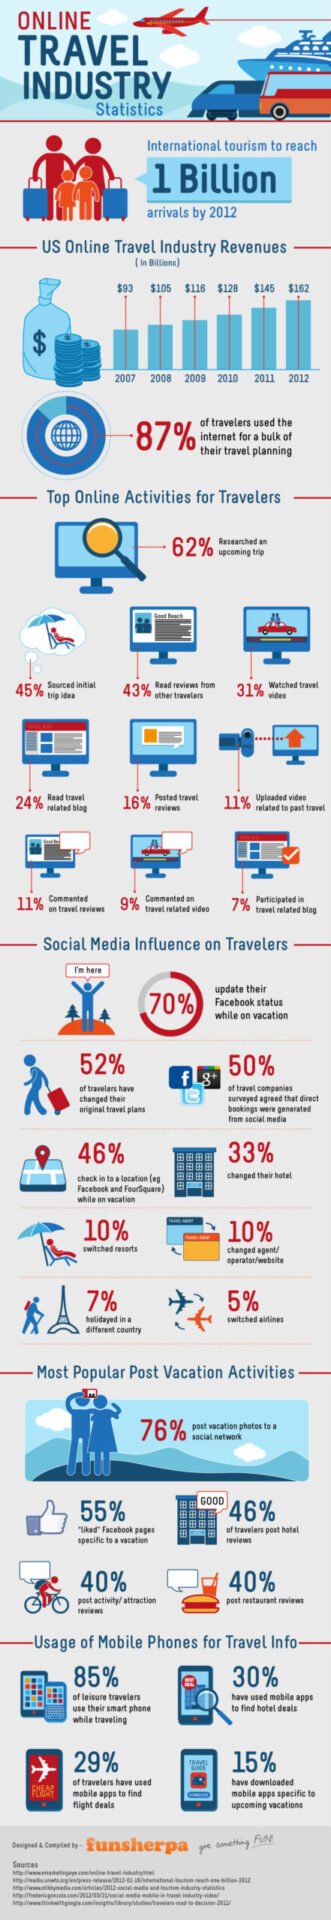 Online travel industry statistics